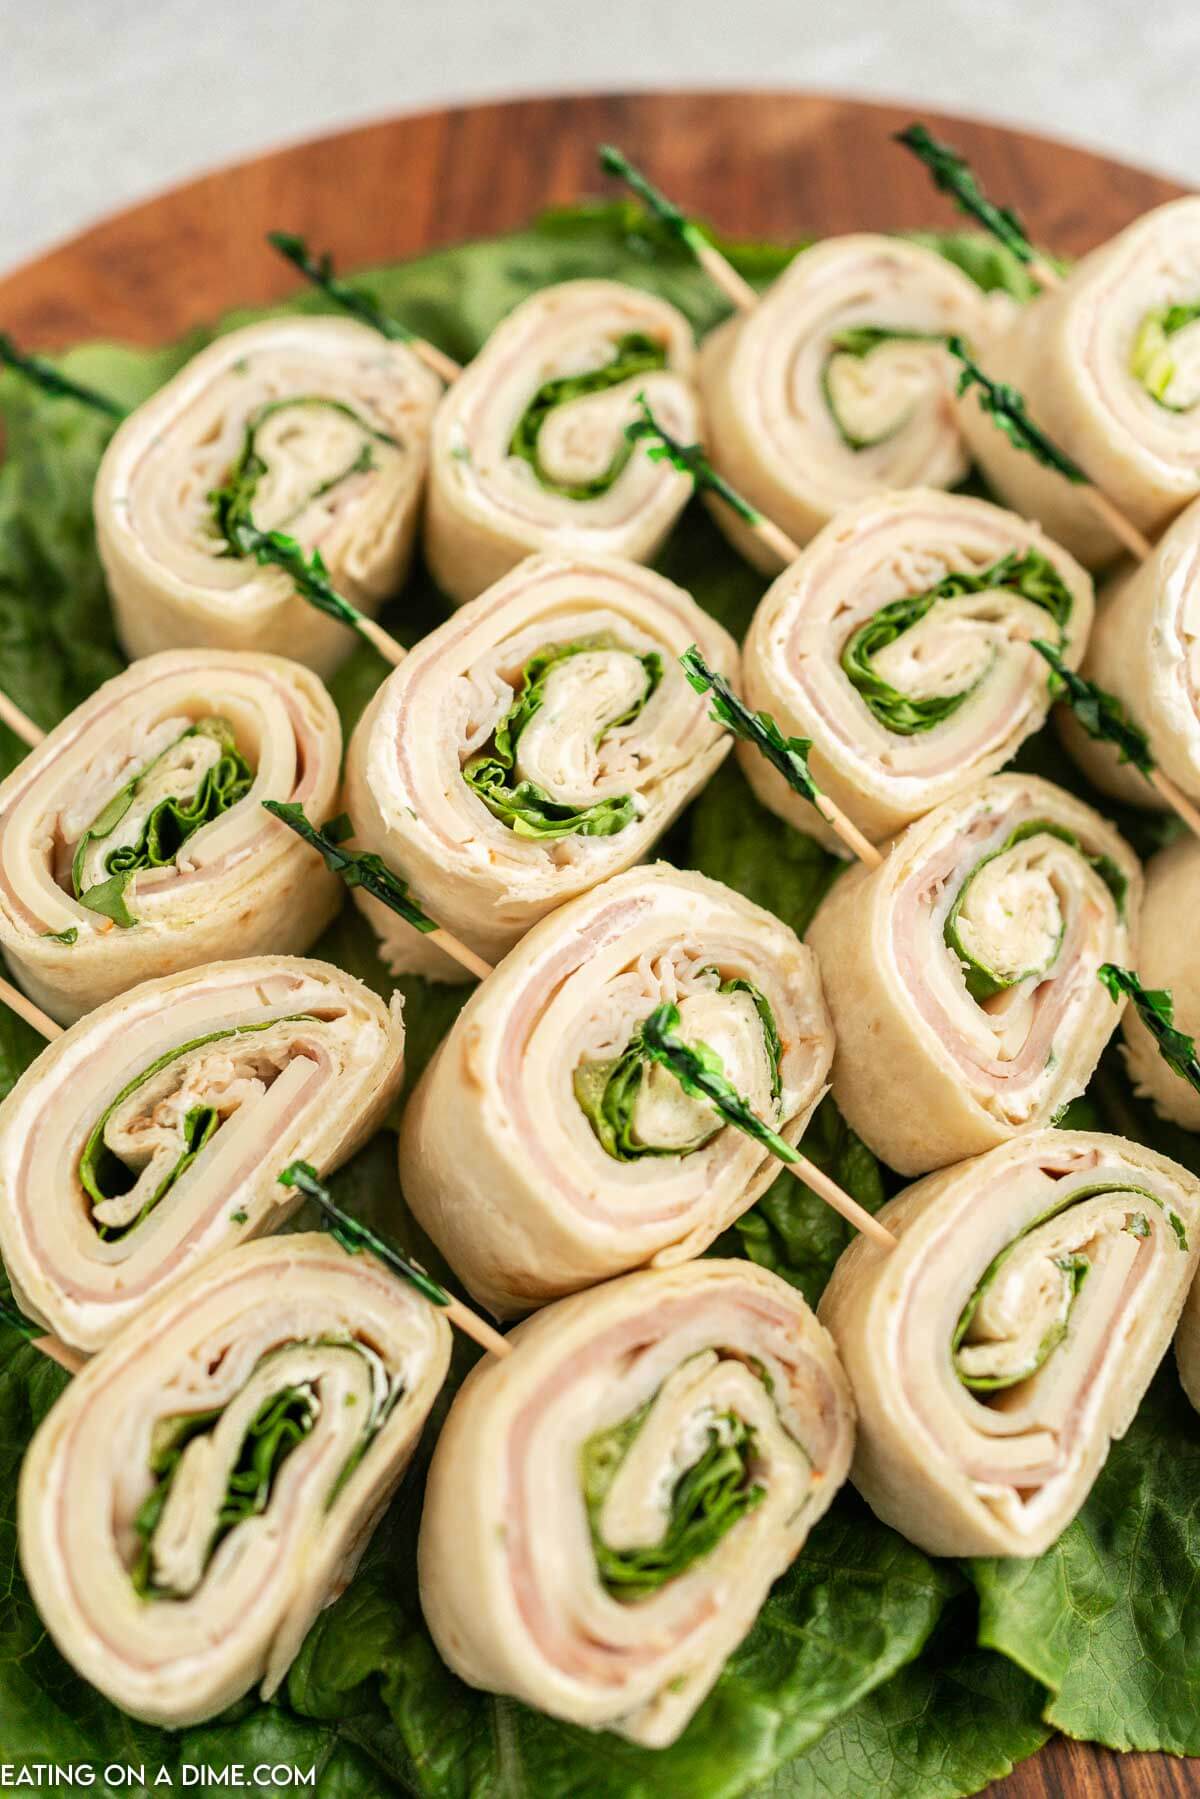 5 Types of Pinwheel Sandwiches + Tasty Variations To Make